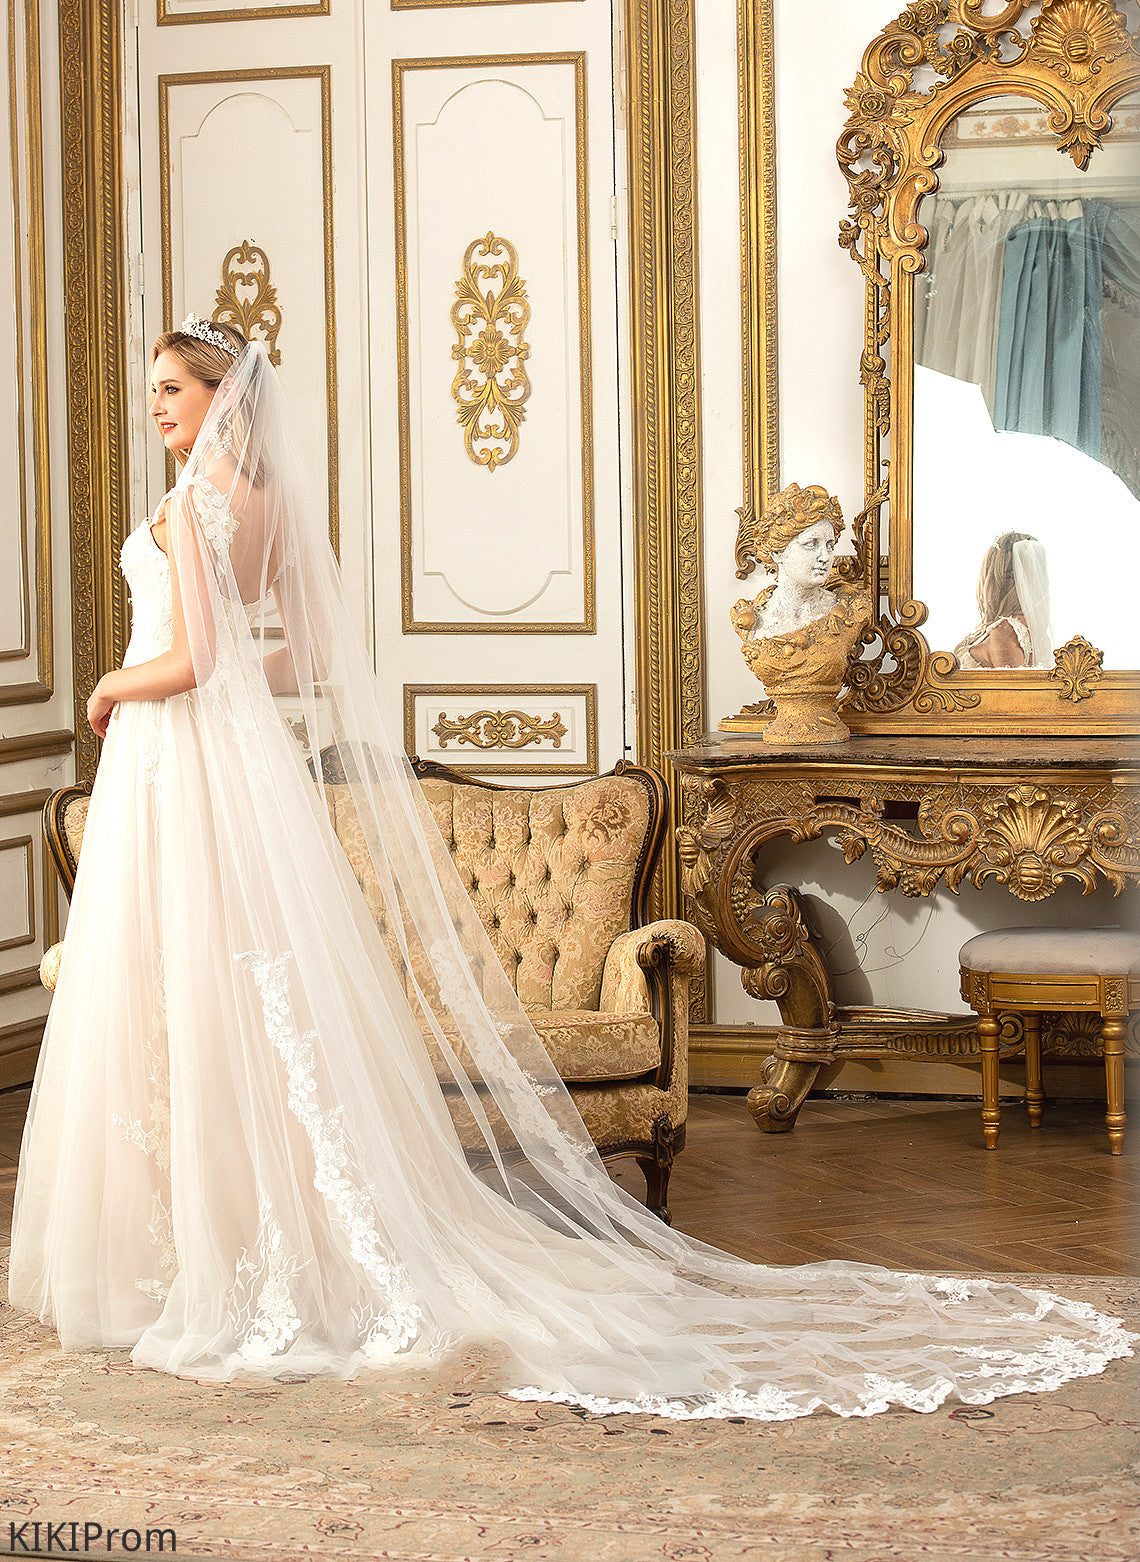 Dress Ball-Gown/Princess Sweetheart Melissa Wedding Dresses Train Wedding Sweep Tulle